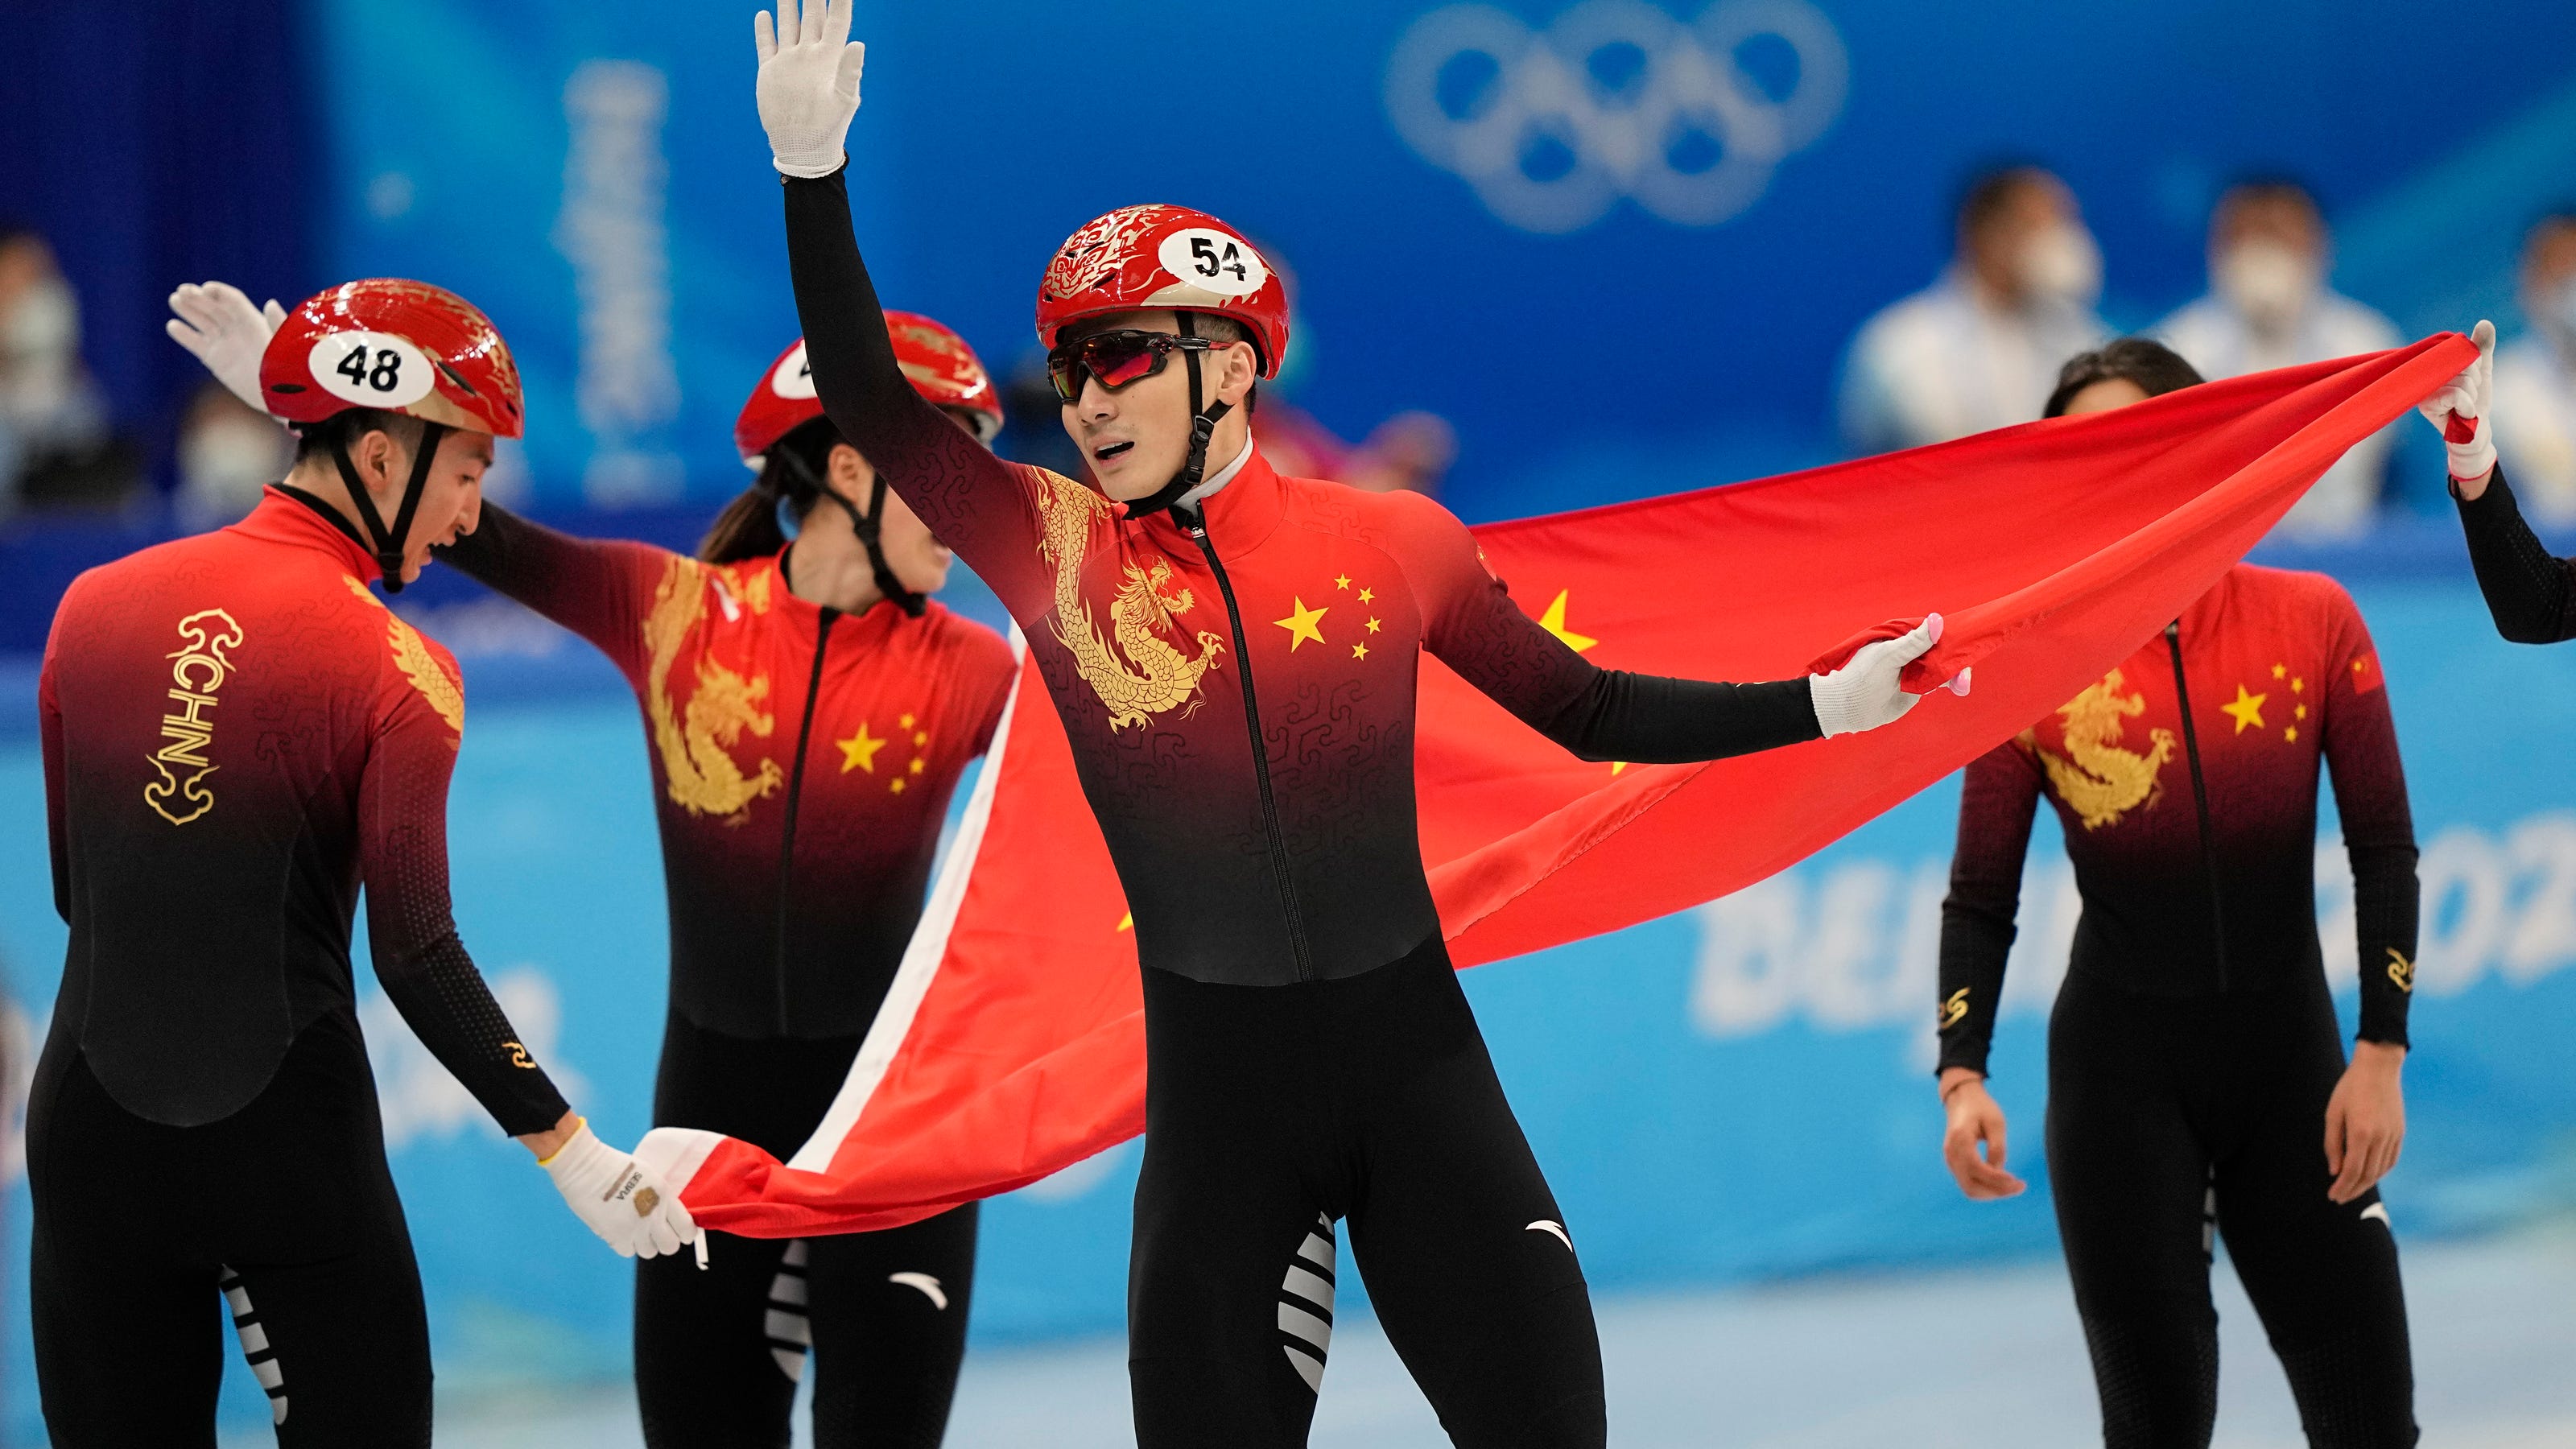 На зимней олимпиаде сборная. Шорт трек Китай на Олимпийских играх 2022. Шорт трек Пекин. Beijing 2022 short track Speed Skating. Сборная Китая на Олимпиаде в Пекине 2022.